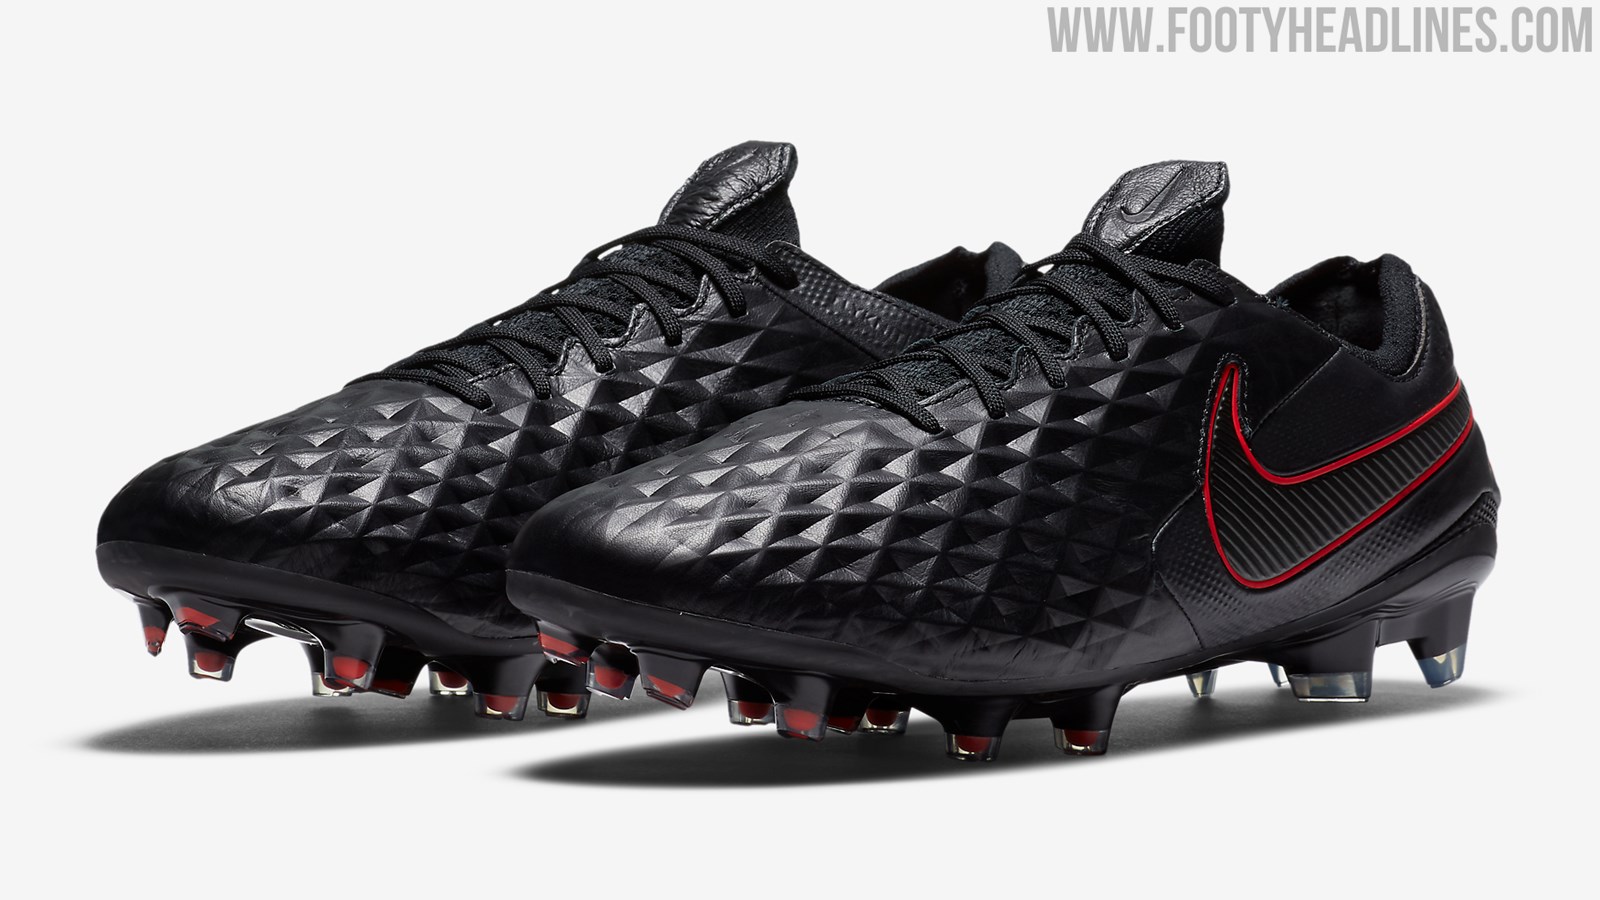 Black / Red Nike Tiempo Legend VIII 2020-21 'Black Pack' Boots Released Footy Headlines